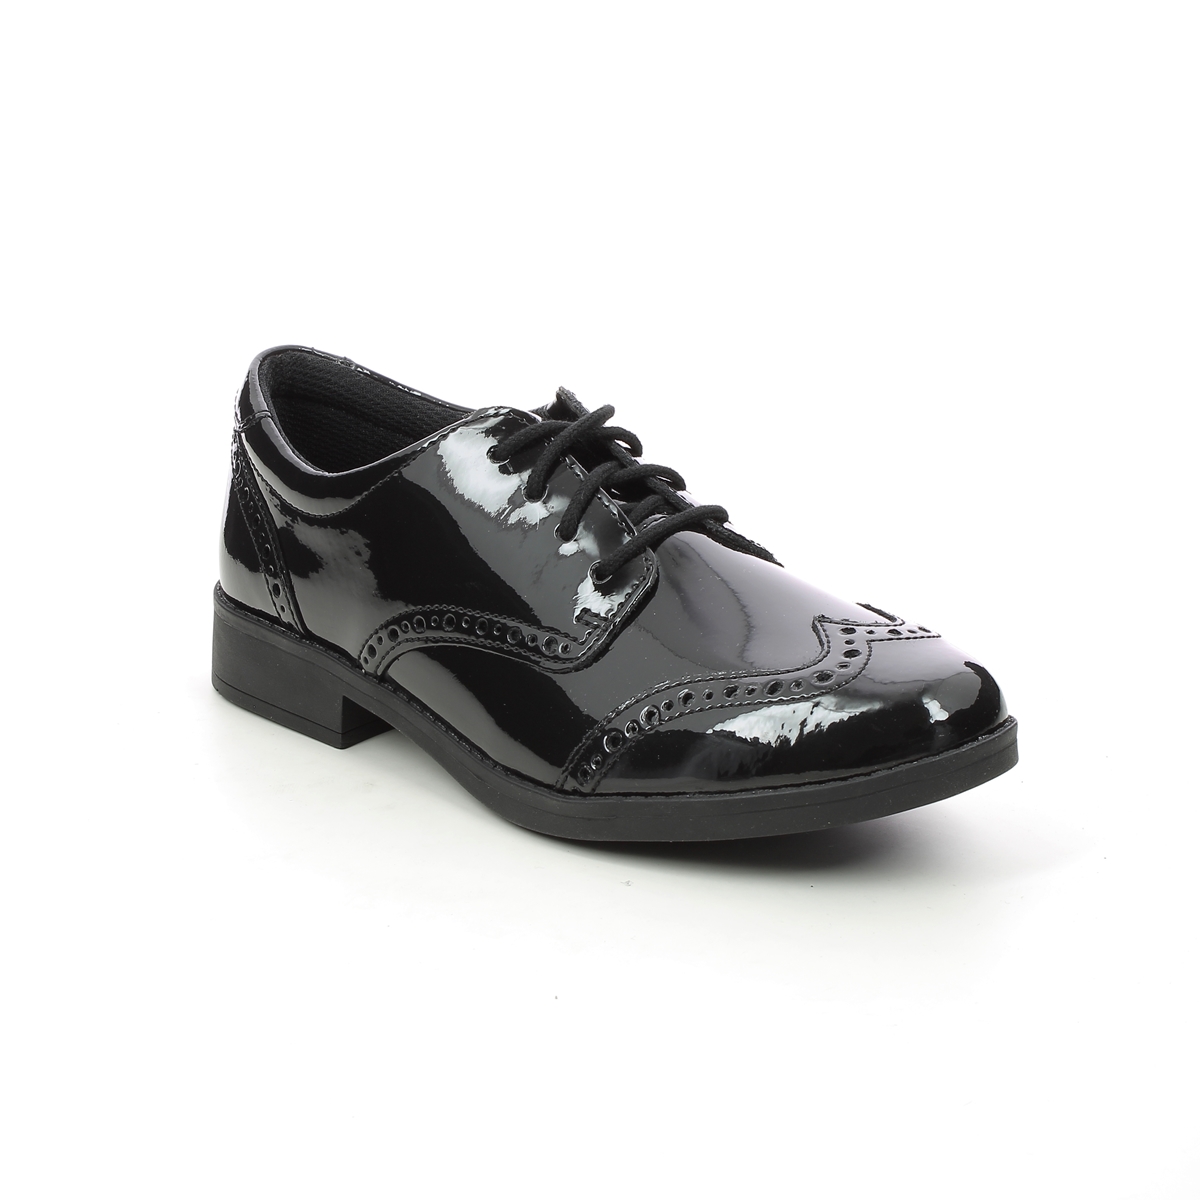 Clarks Aubrie Craft Y Girls Senior School Shoes 4.5 UK Black 